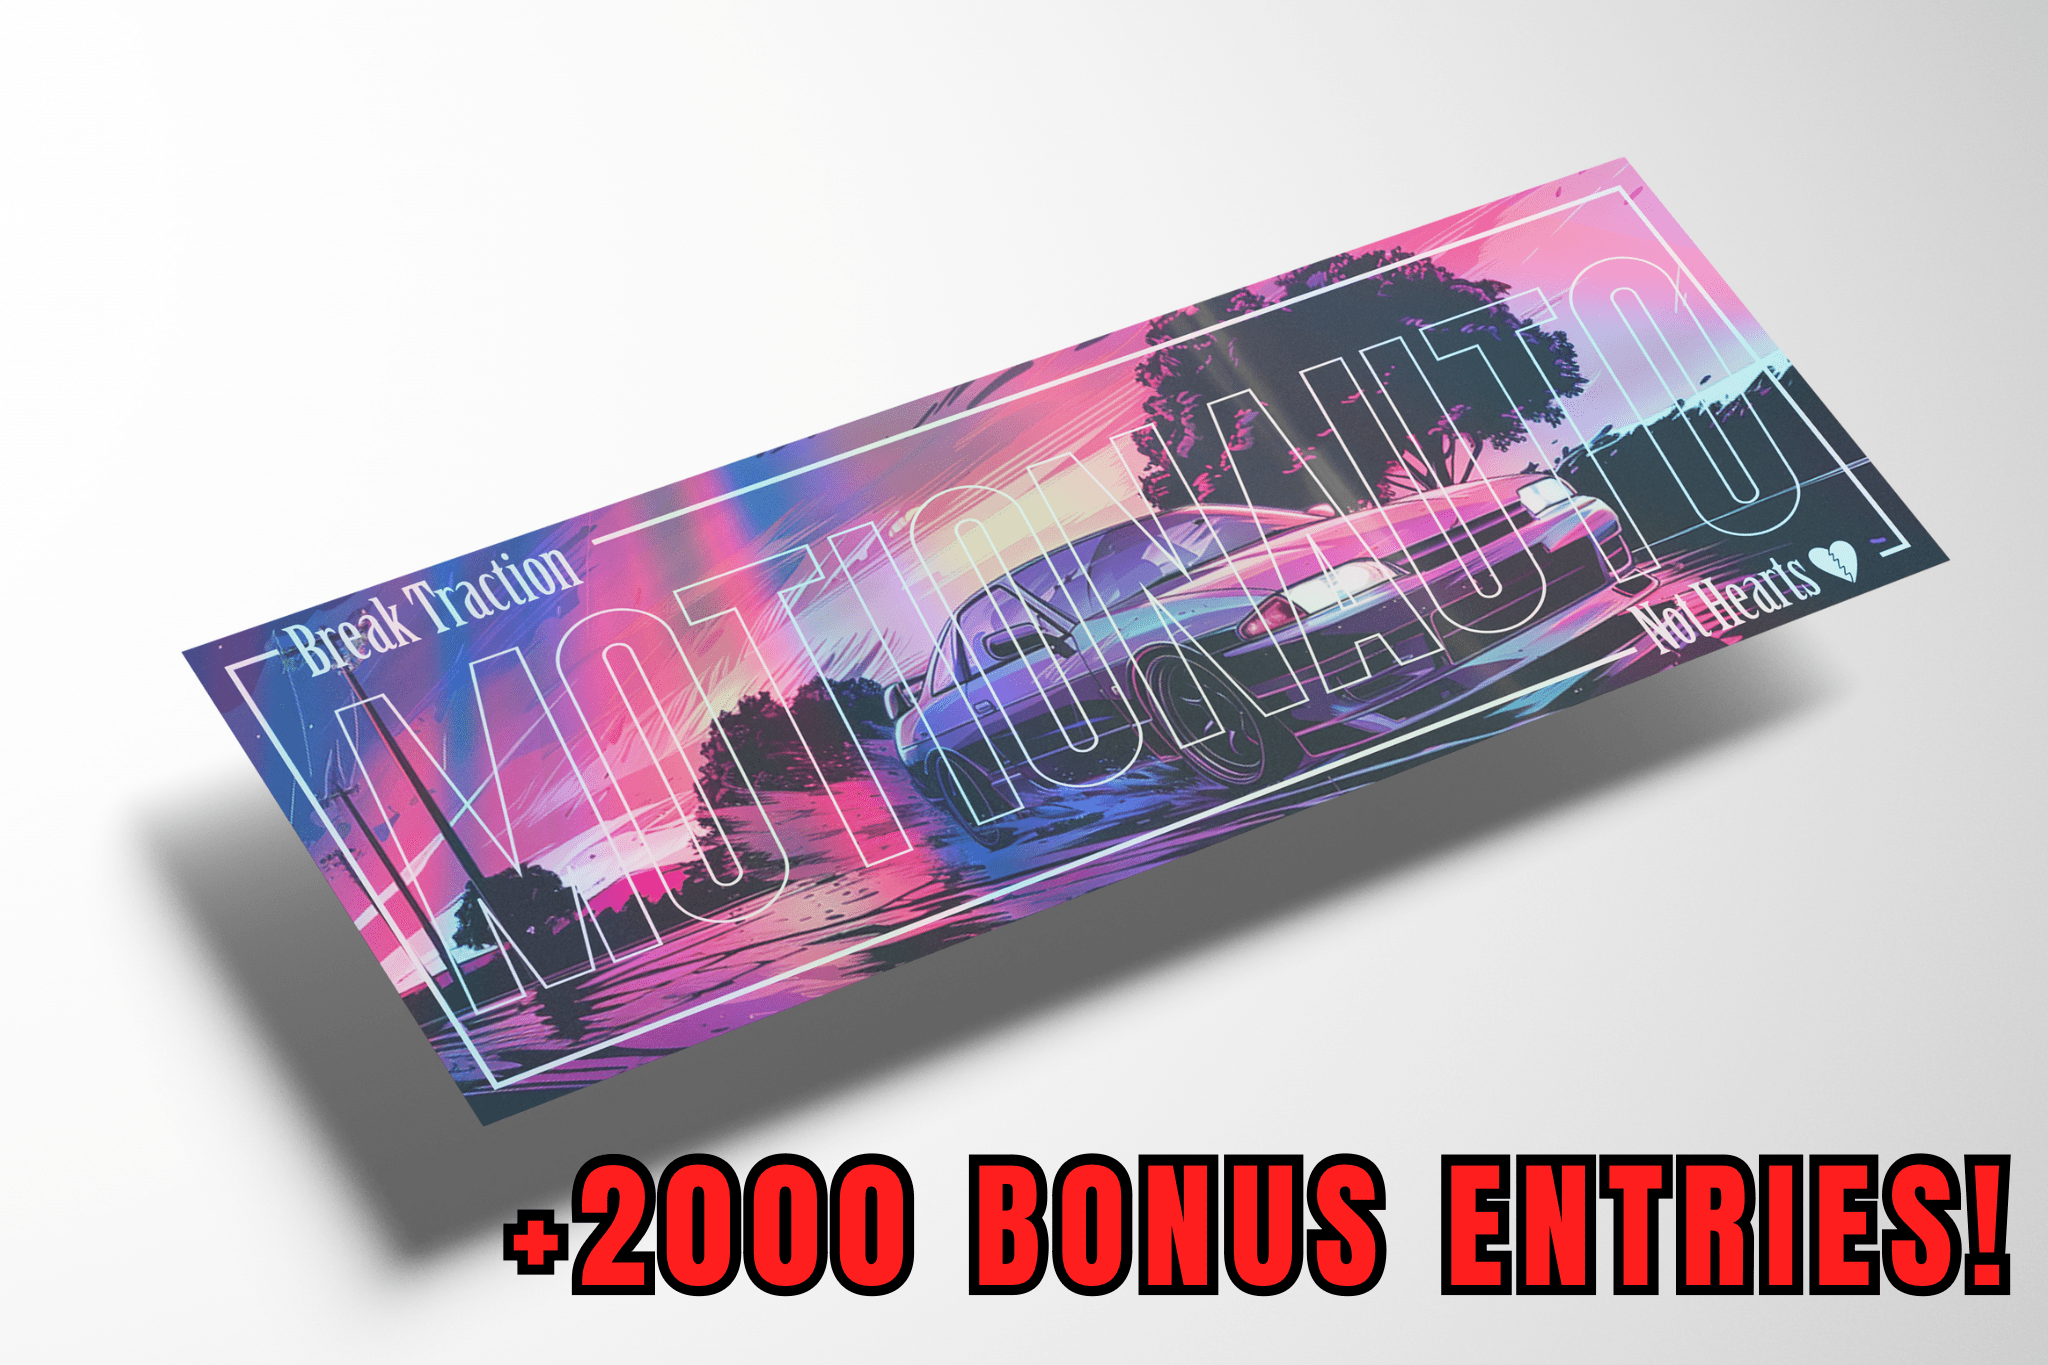 Limited - Post Card & Slap Sticker + 2000 Bonus Entries!